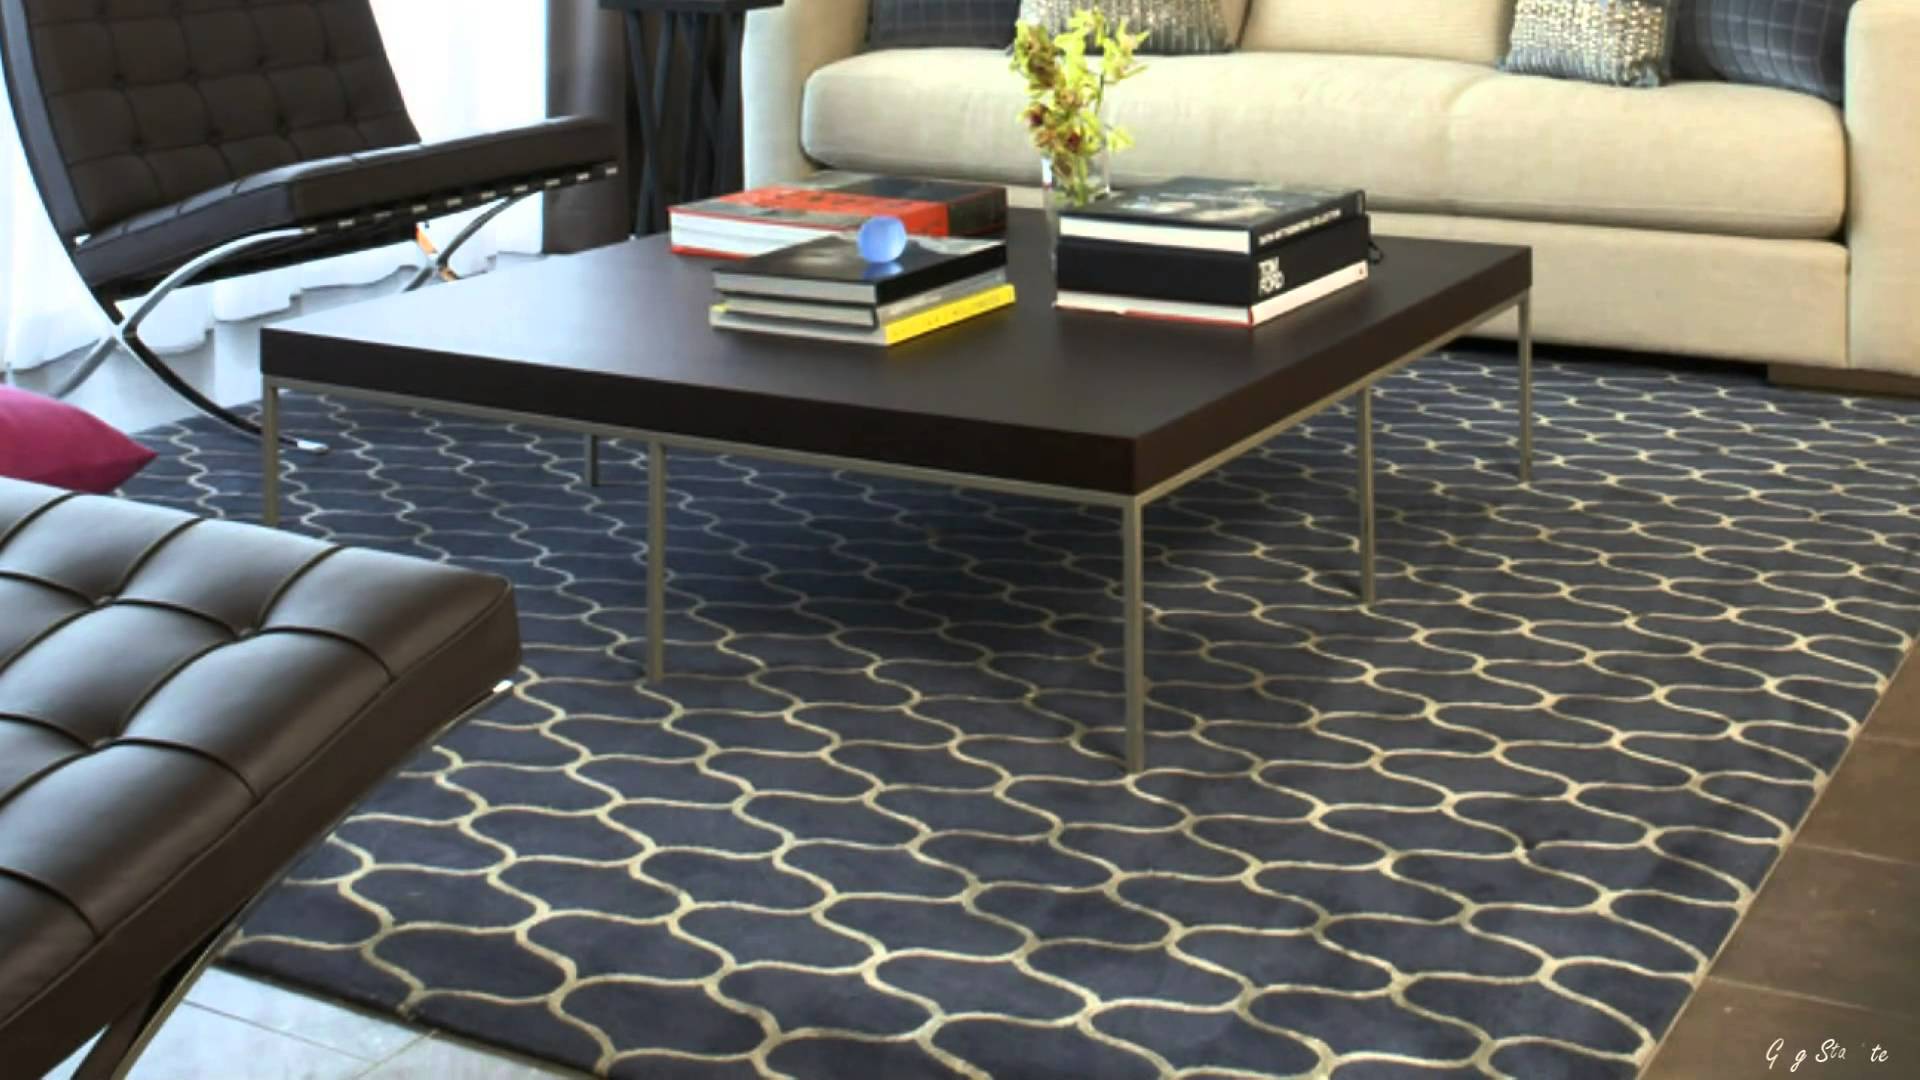 carpet design ideas patterned carpet - living room design ideas - youtube XIGZUFE